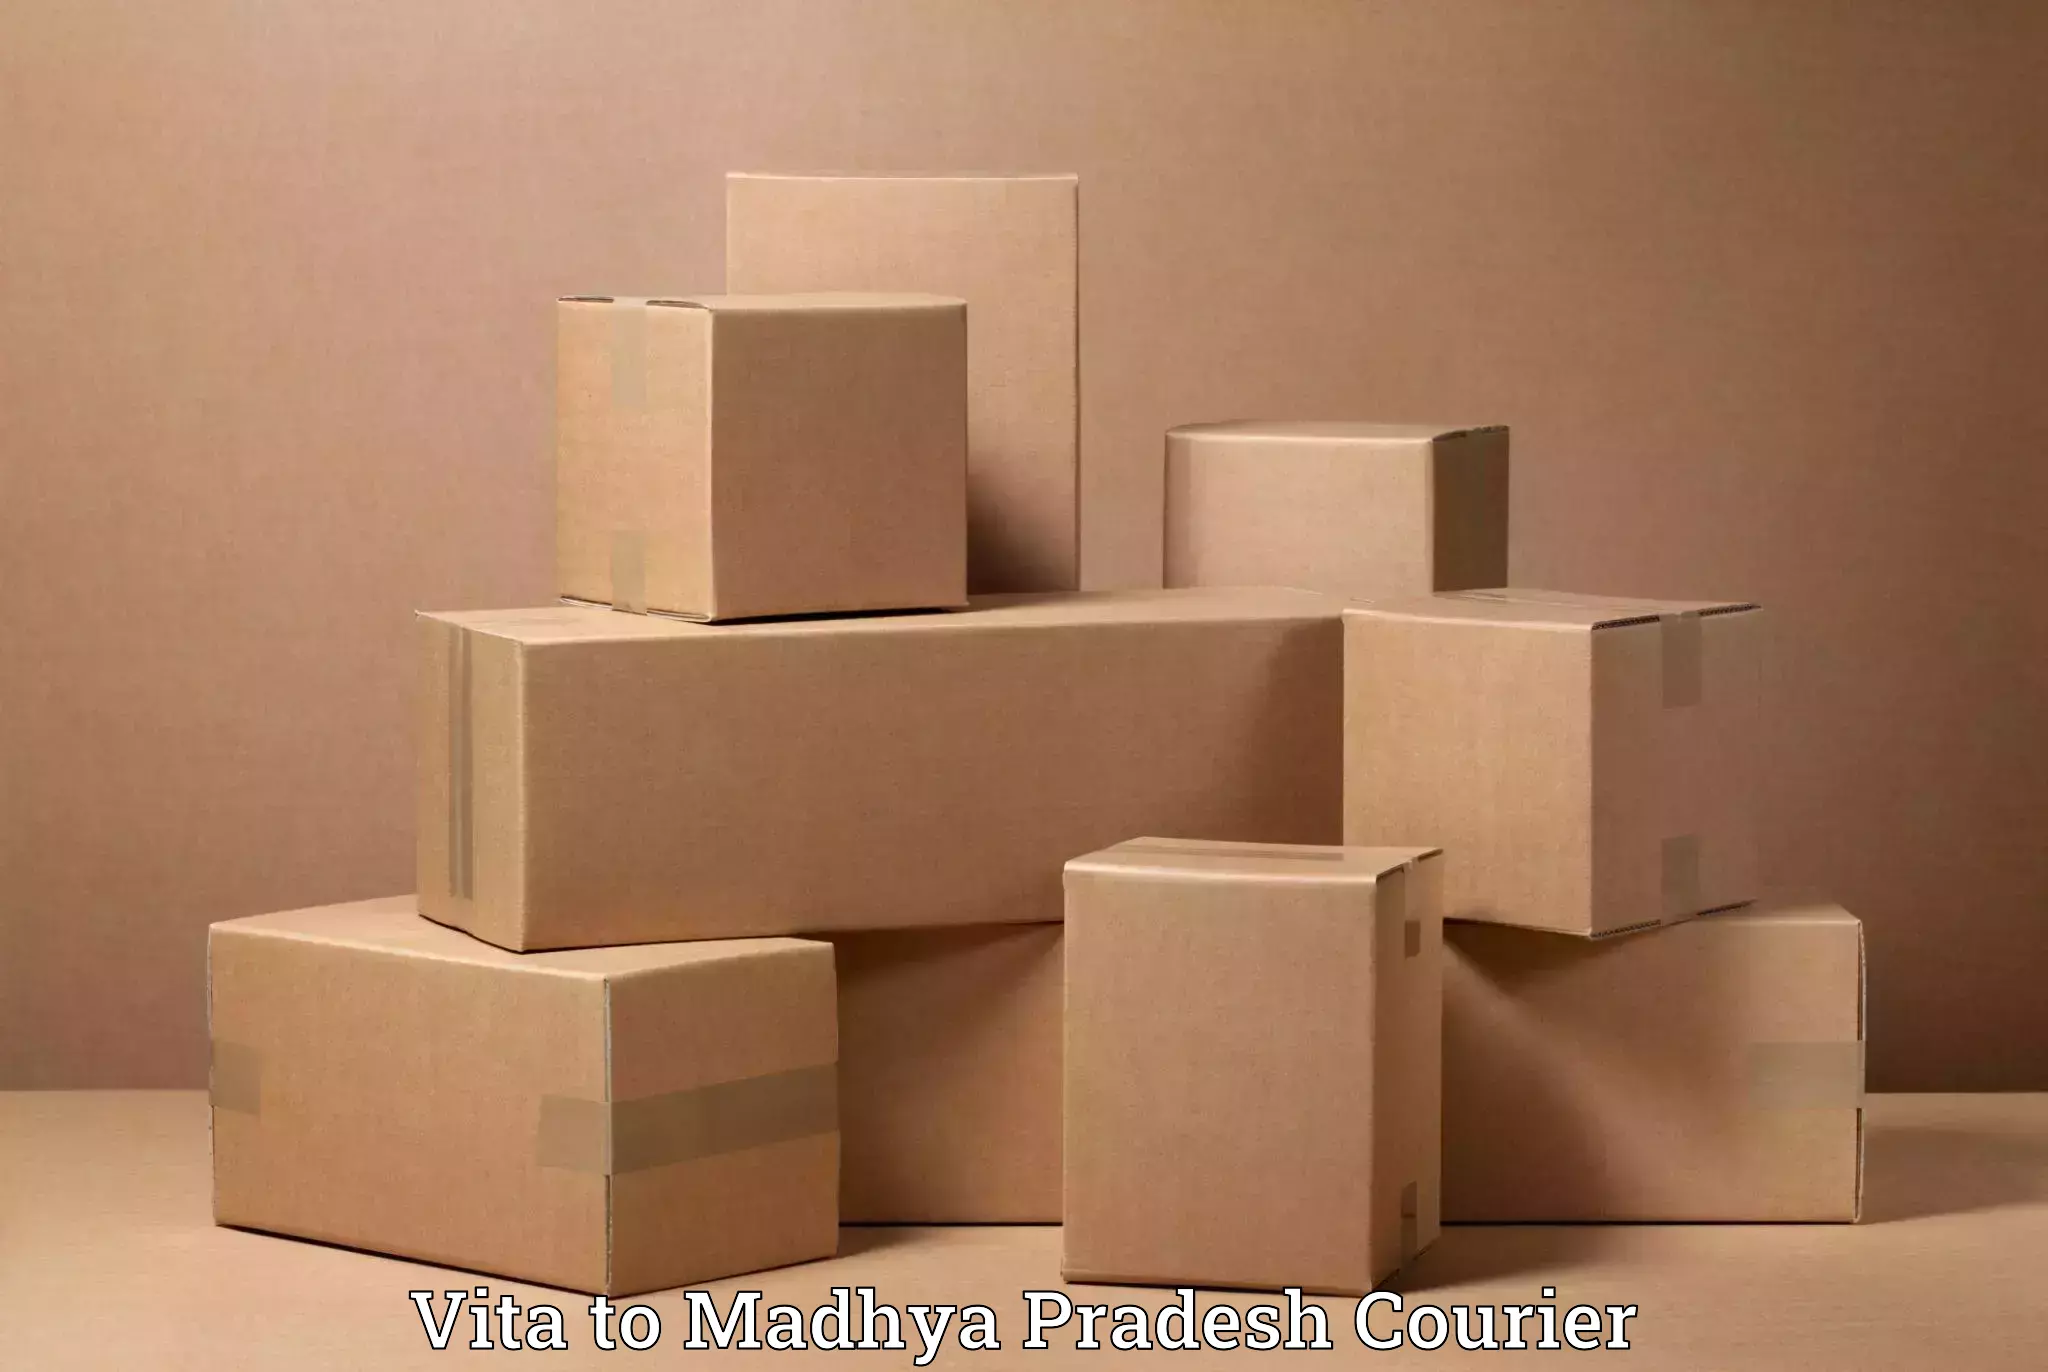 Quality moving company in Vita to Madhya Pradesh